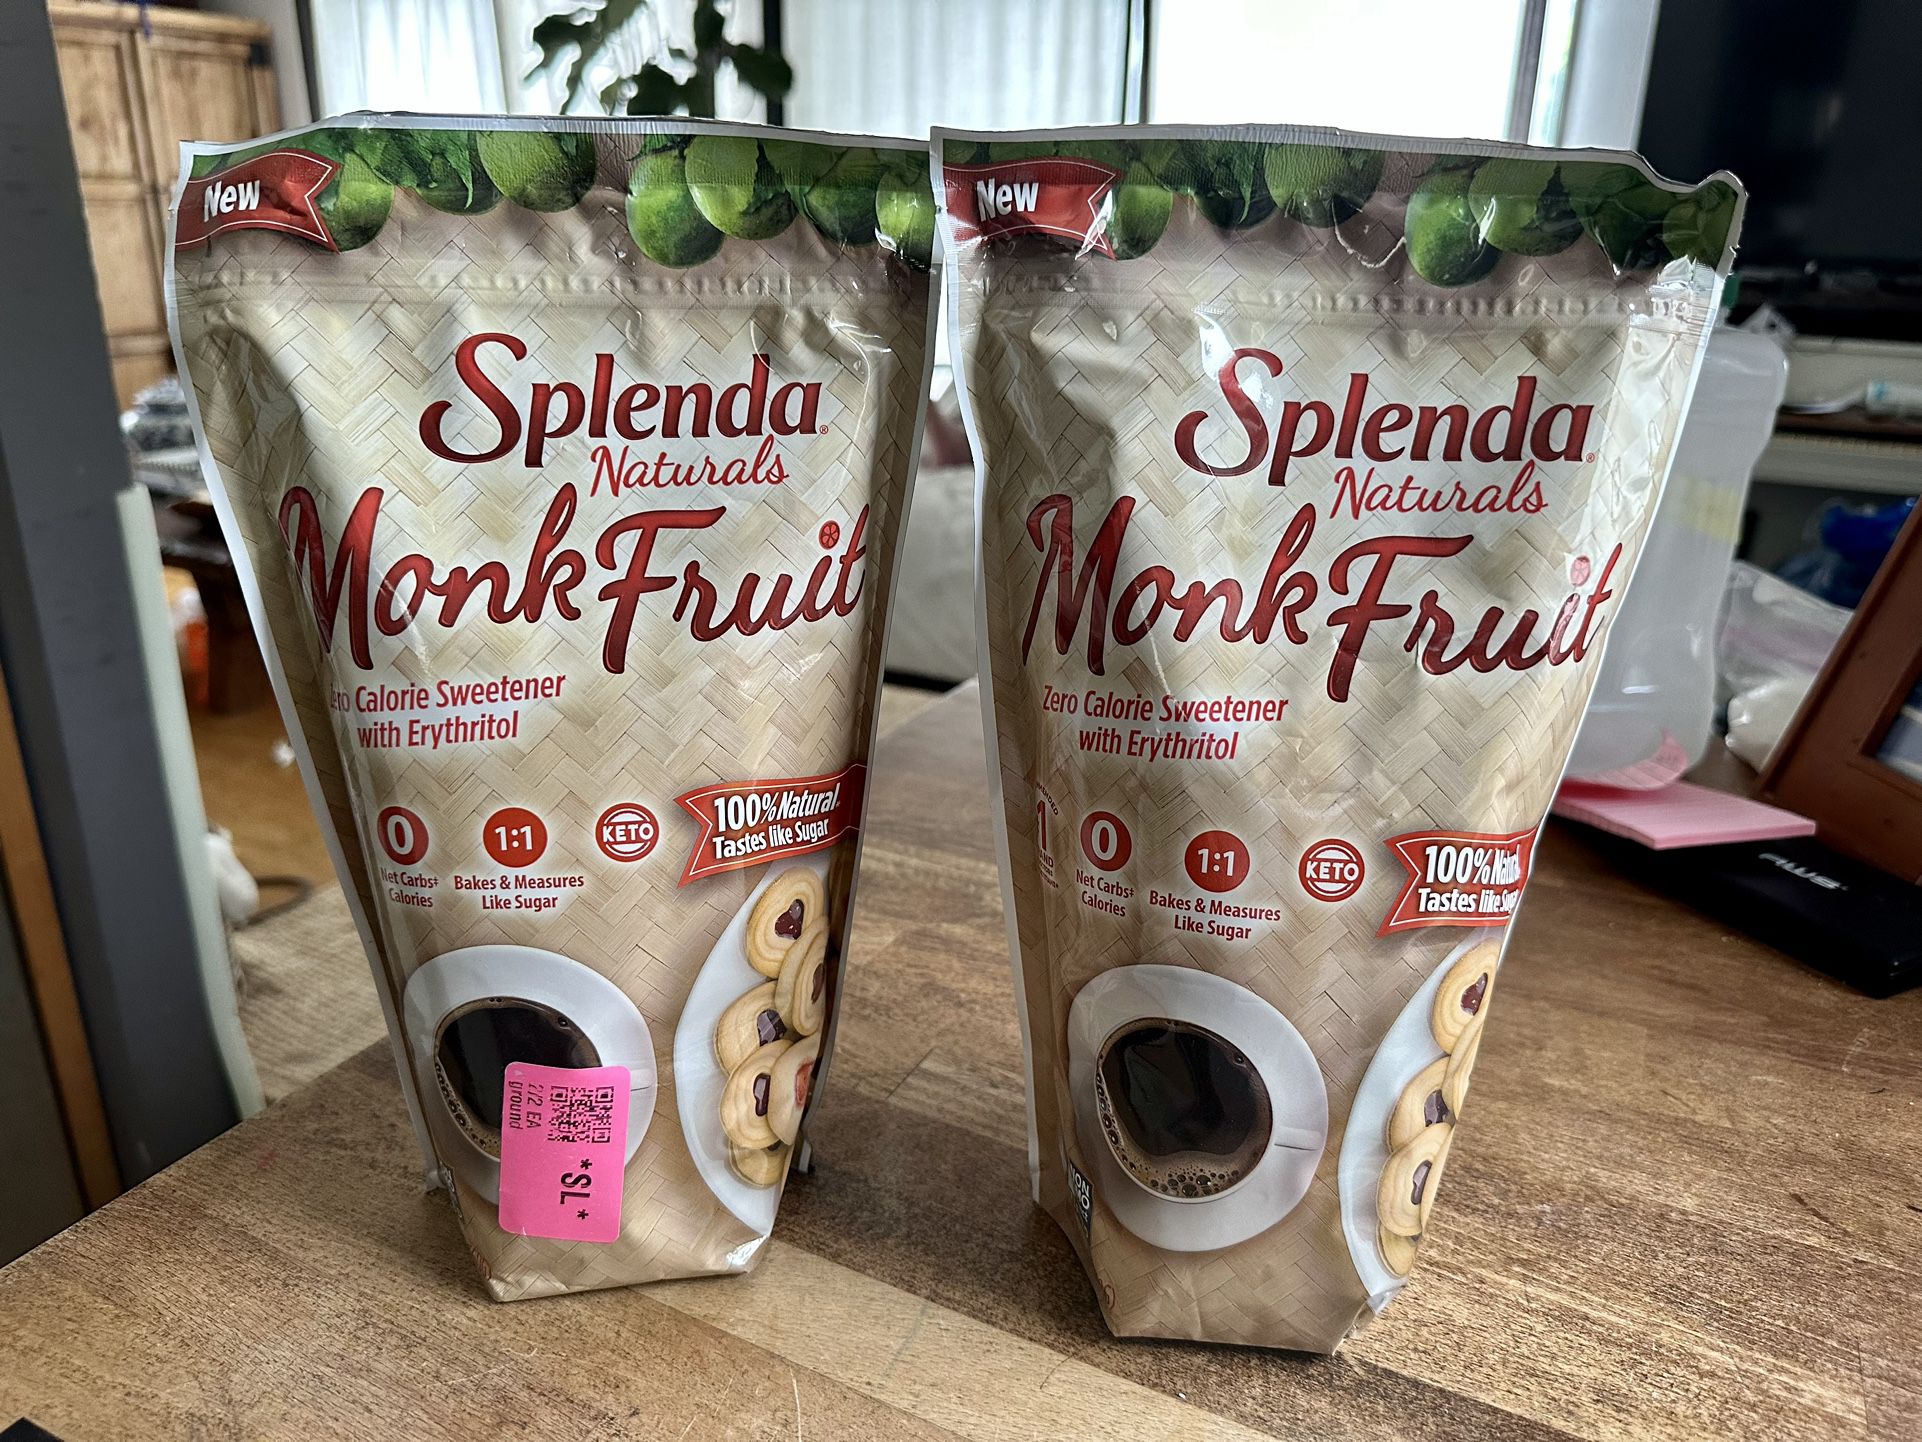 2 Bags Of 3 Lbs Splenda Naturals Monk Fruit Zero Calorie Sweetener With Erythritol